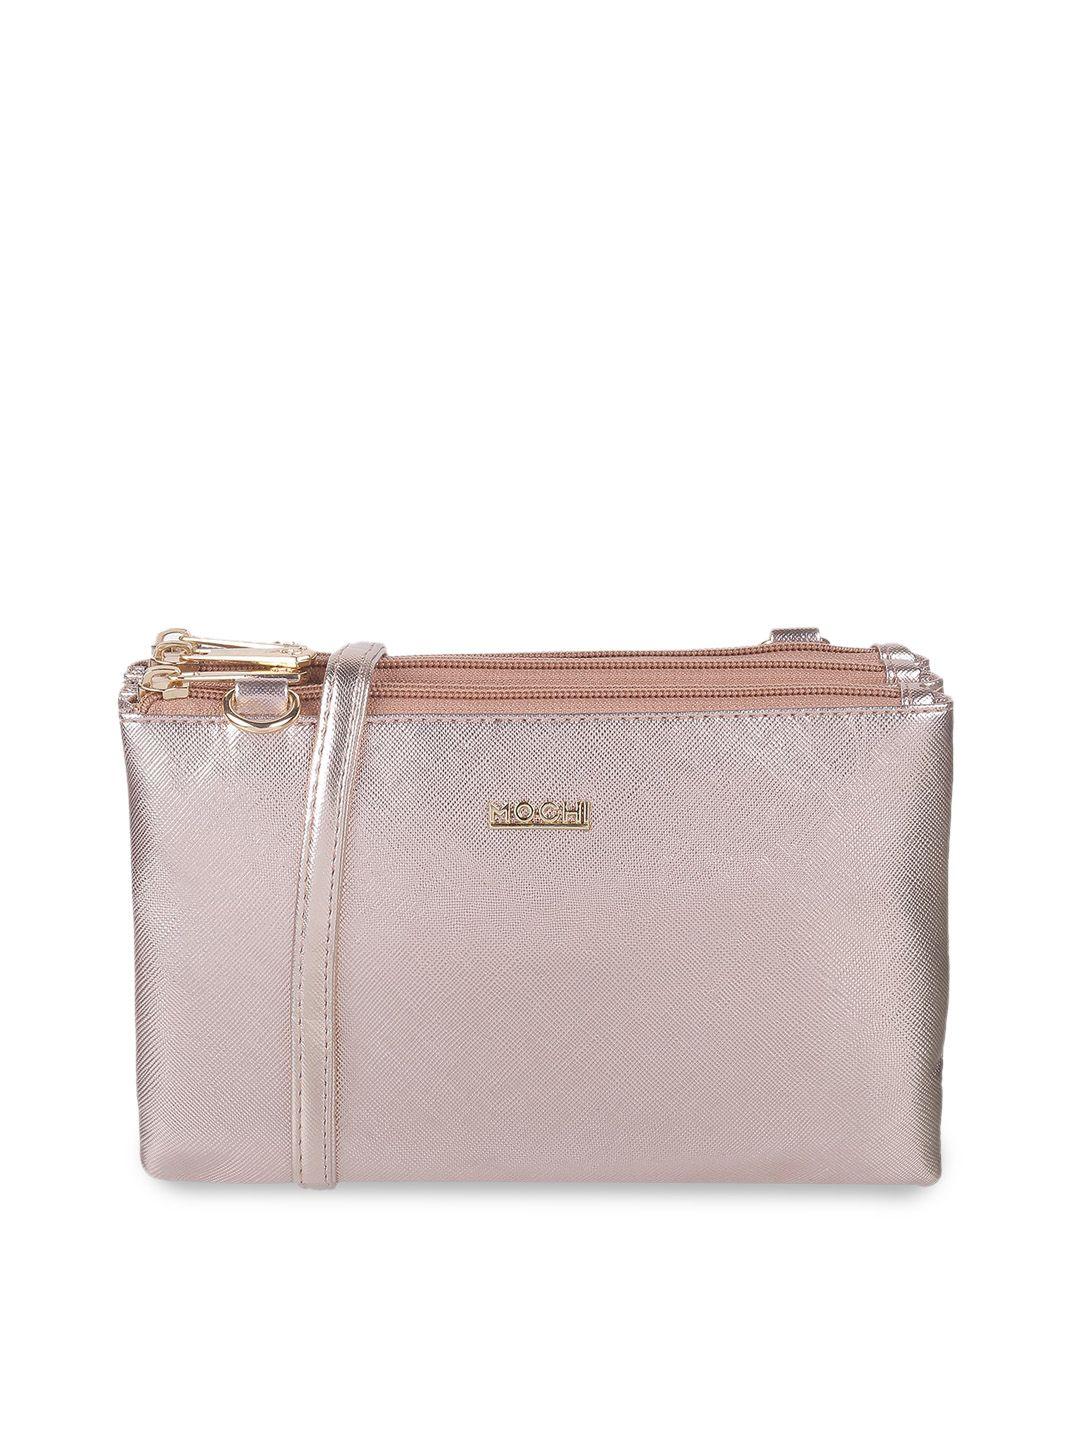 mochi pink textured purse clutch